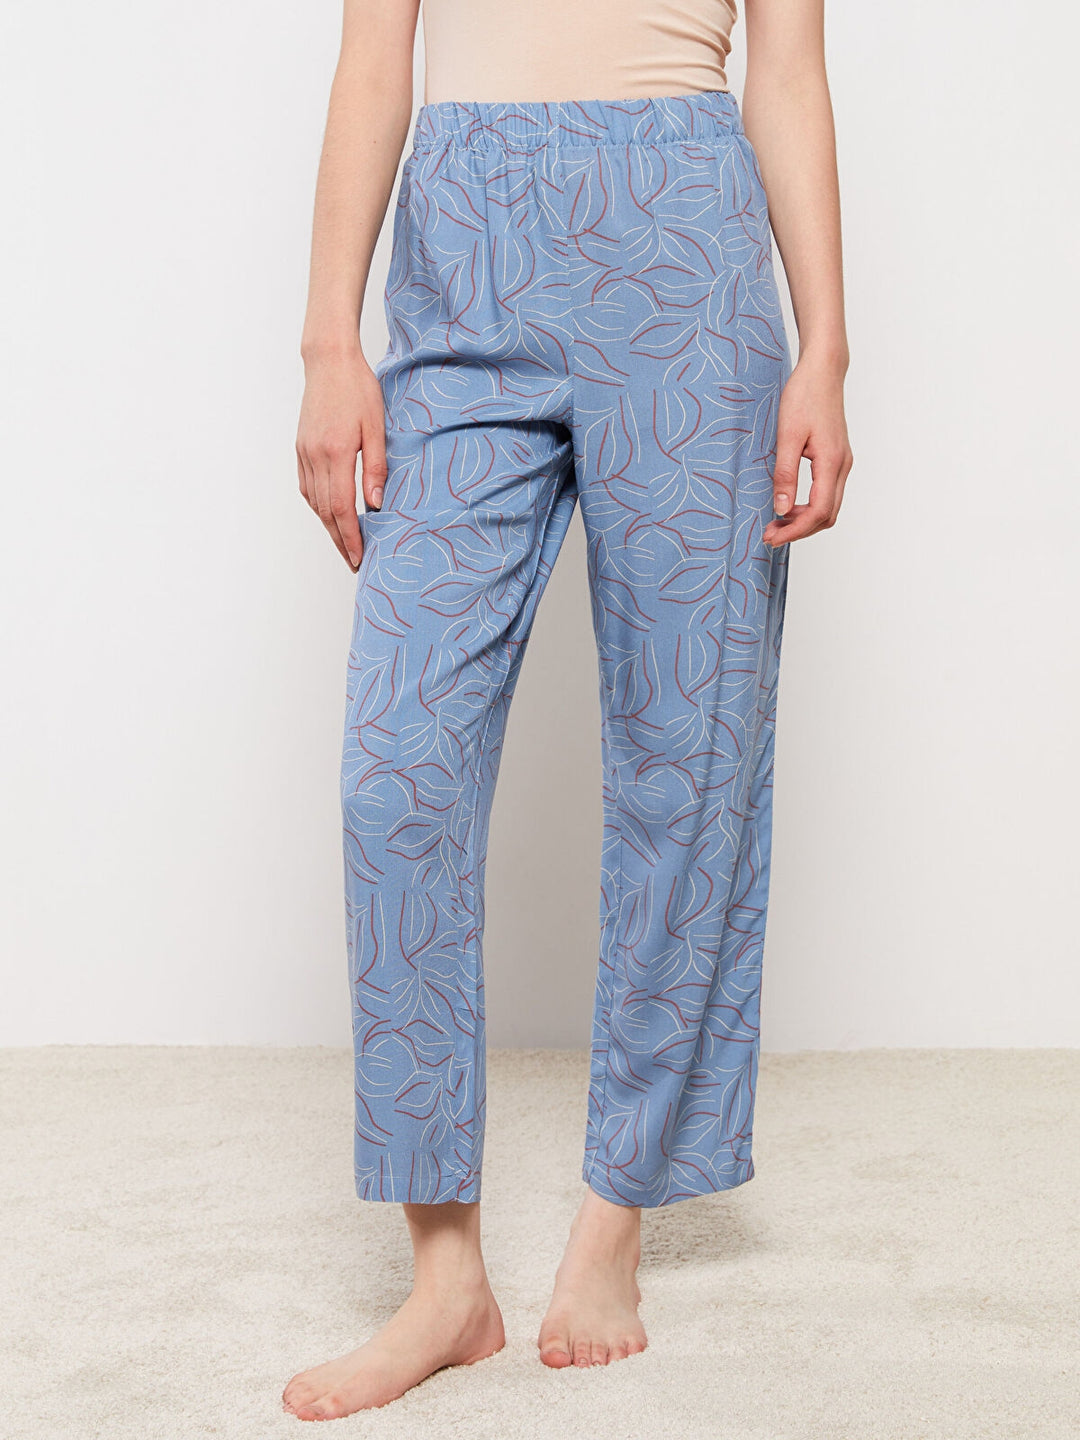 Elastic Waist Patterned Viscose Women Pajamas Bottom